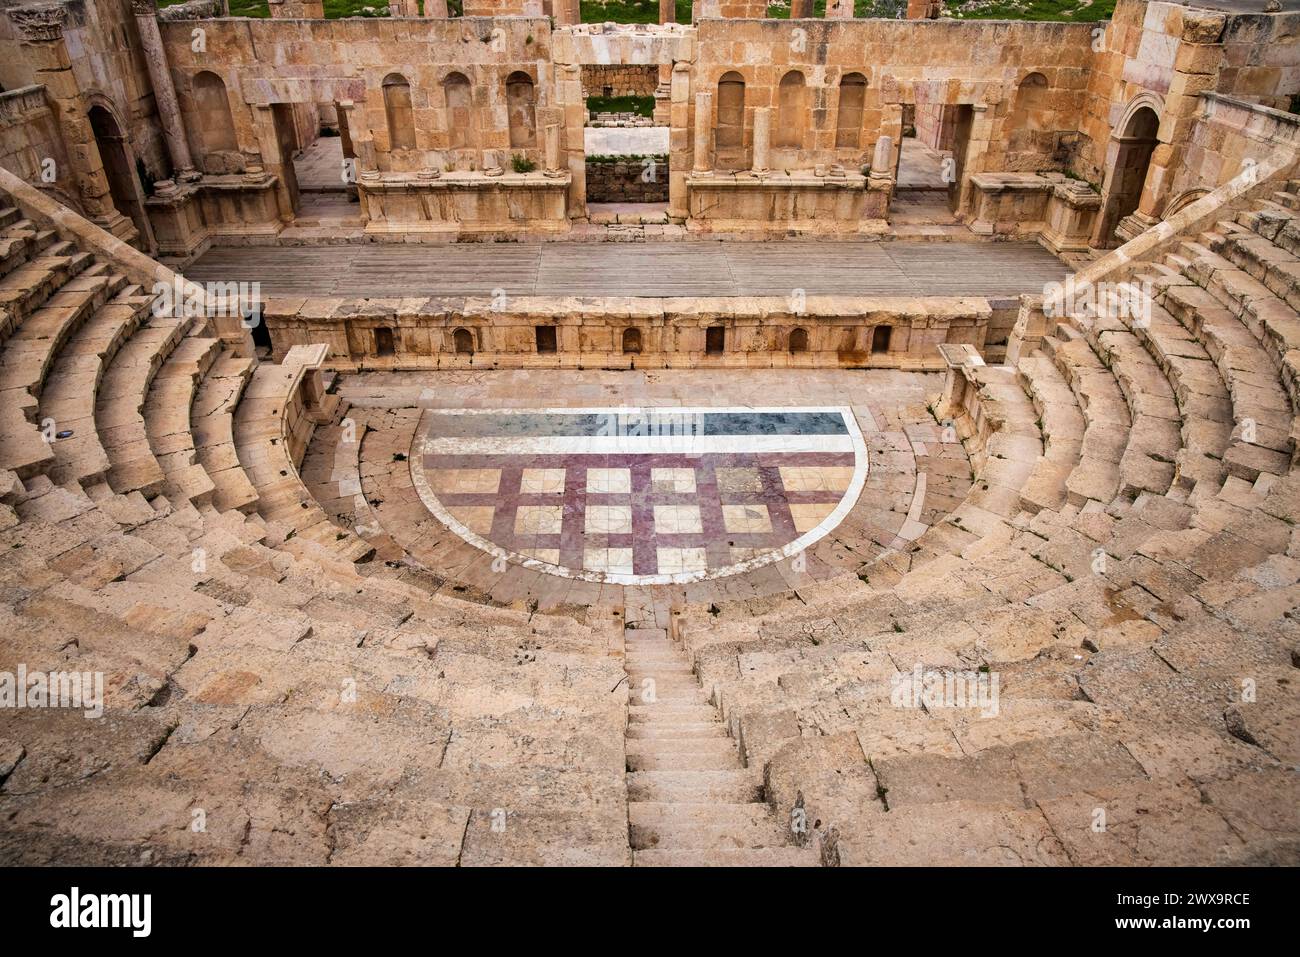 the north theatre or ampitheatre in the greco roman ruins of jerash in jordan Stock Photo